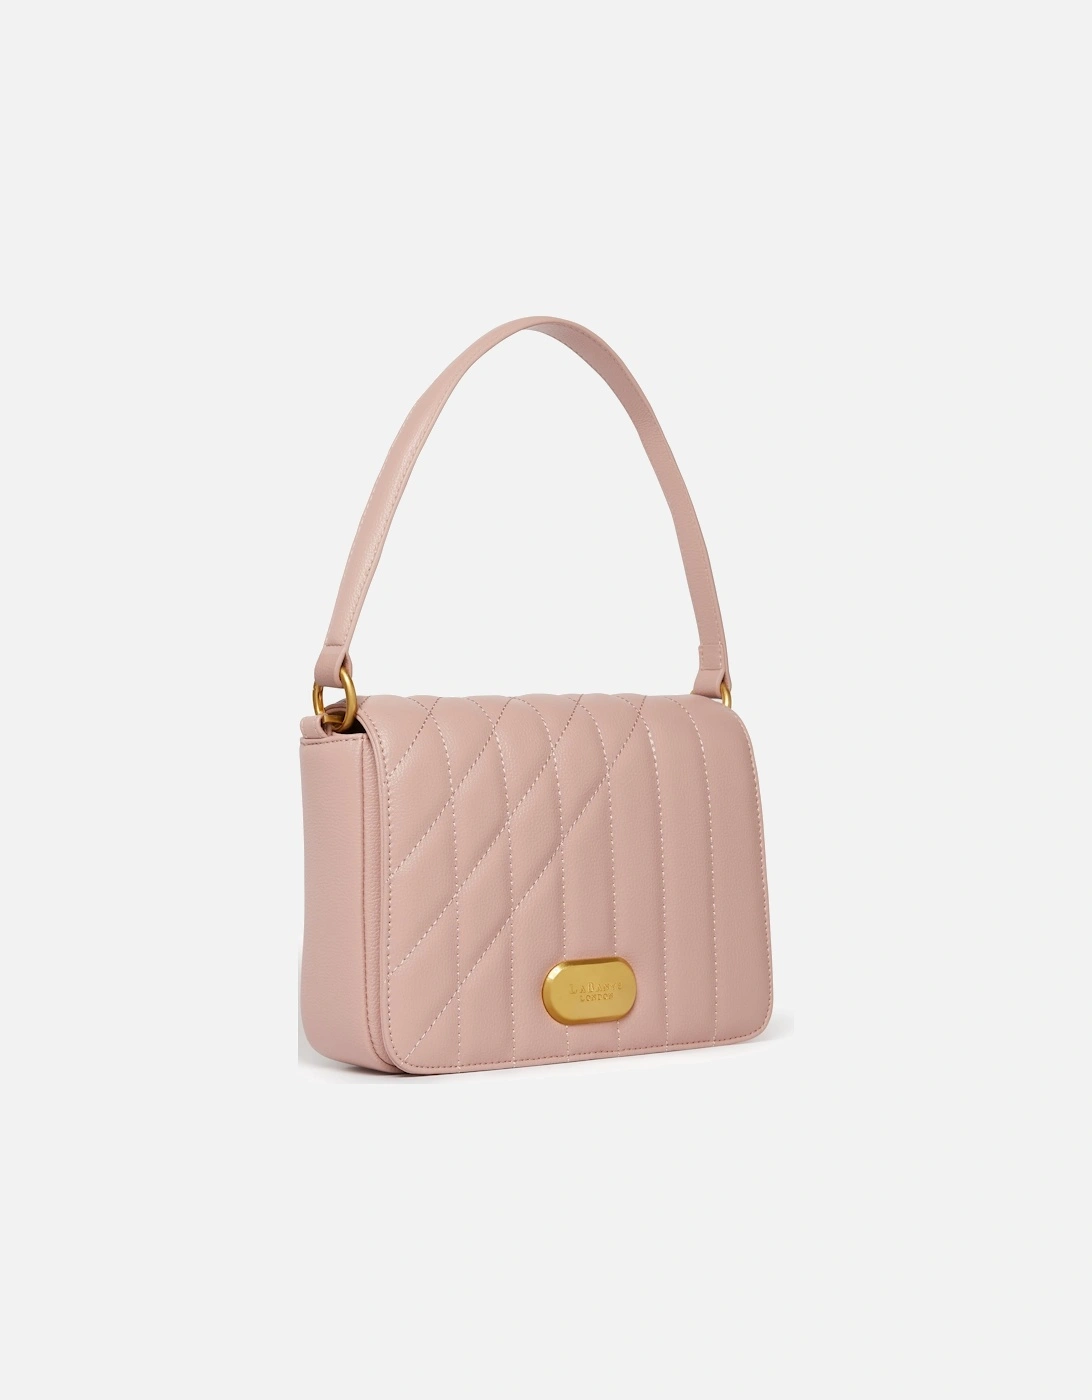 Iris Shoulder Bag in Pink